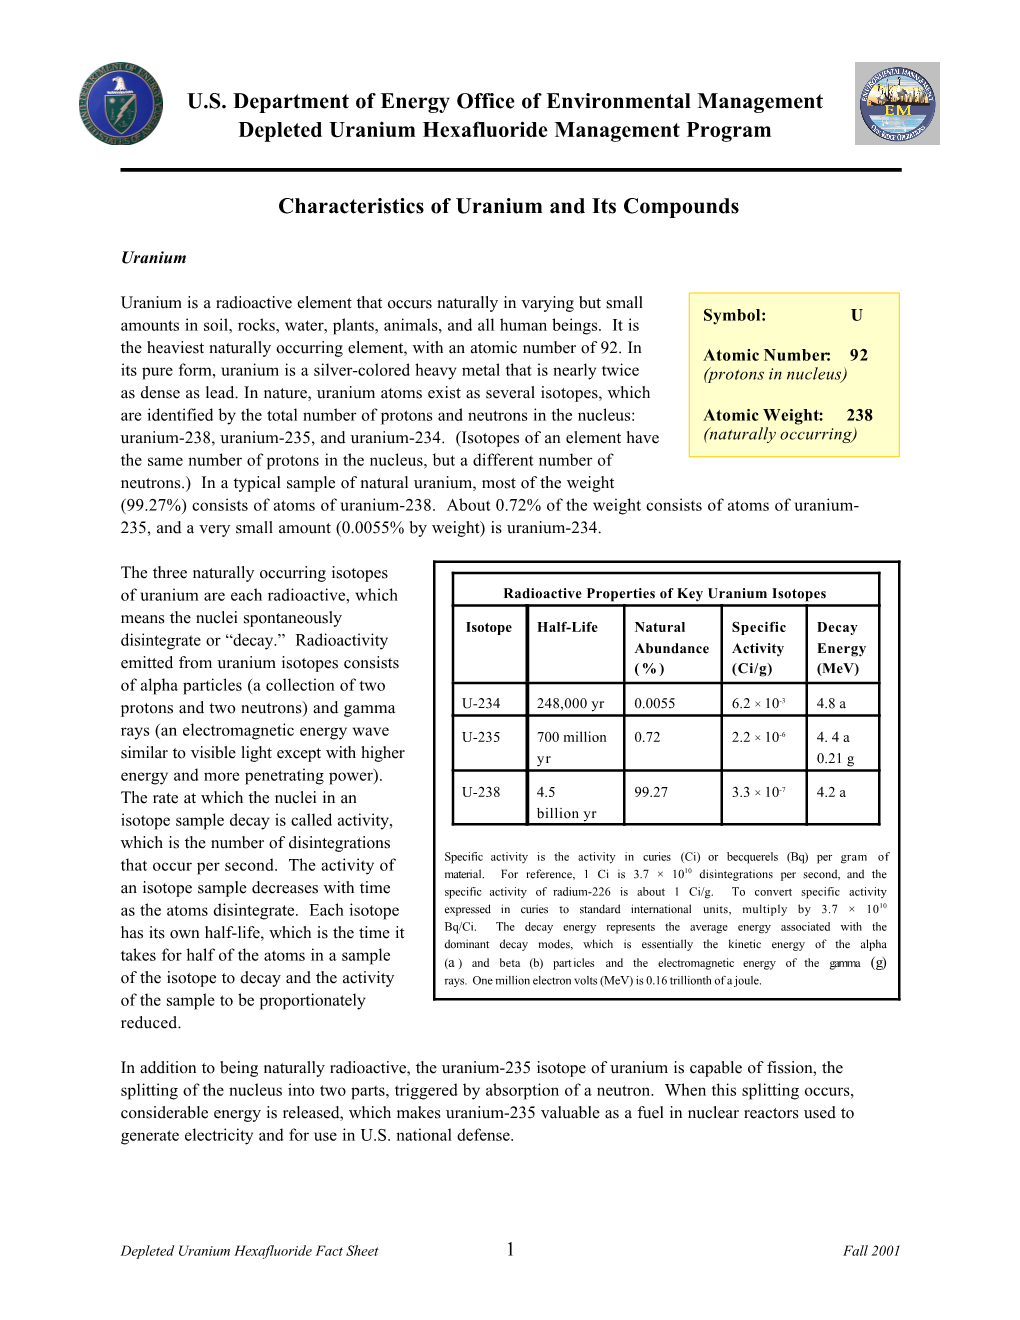 Characteristics of Uranium and Its Compounds